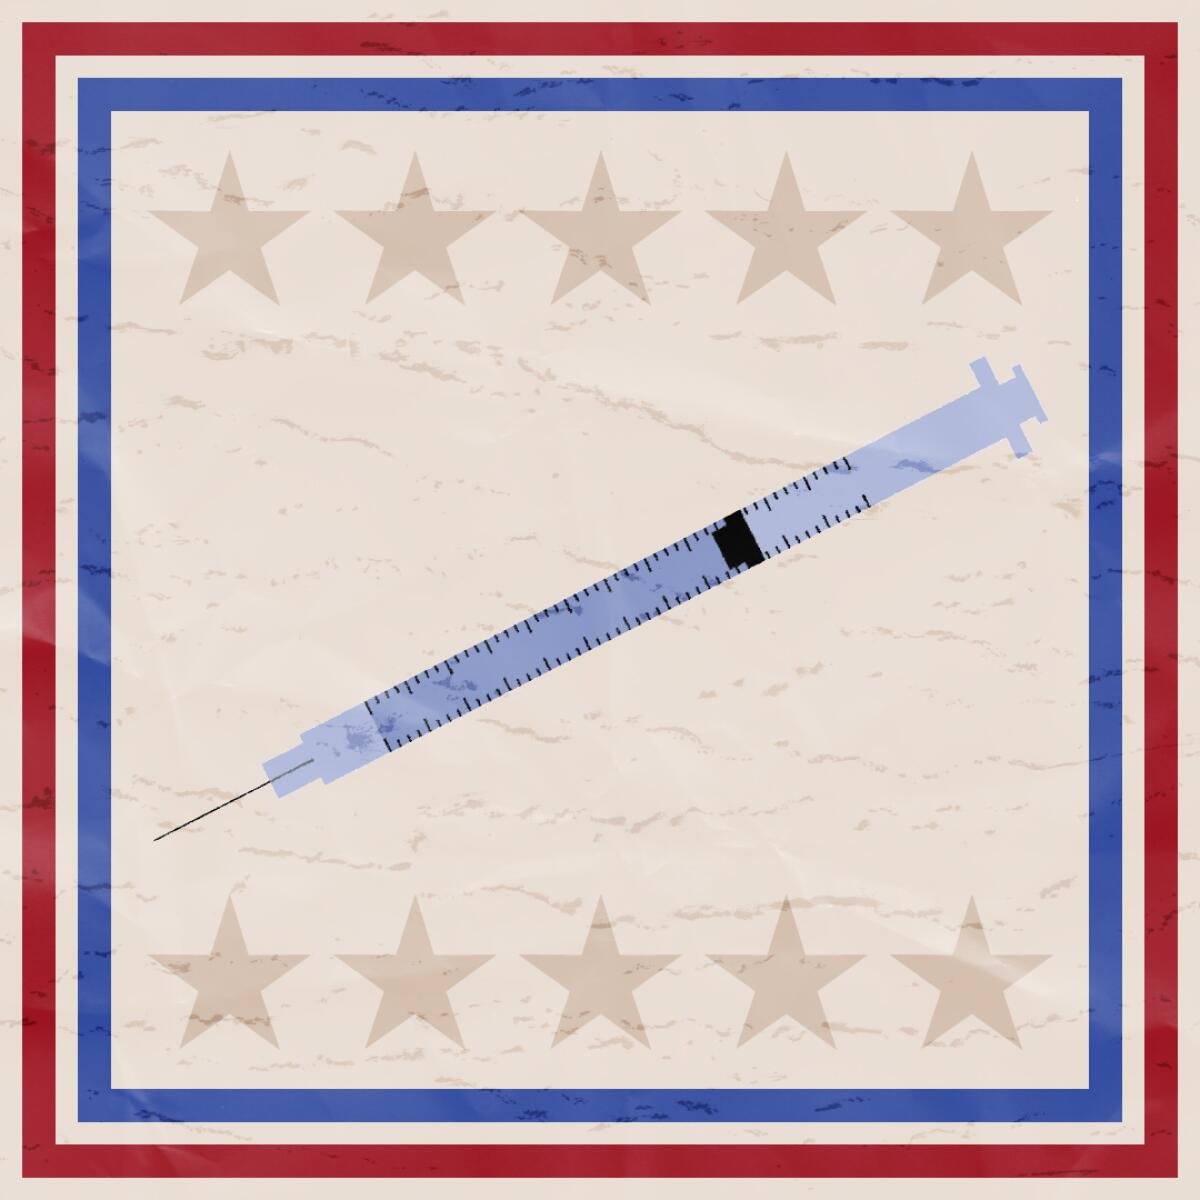 An illustration of a syringe on a patriotic background 